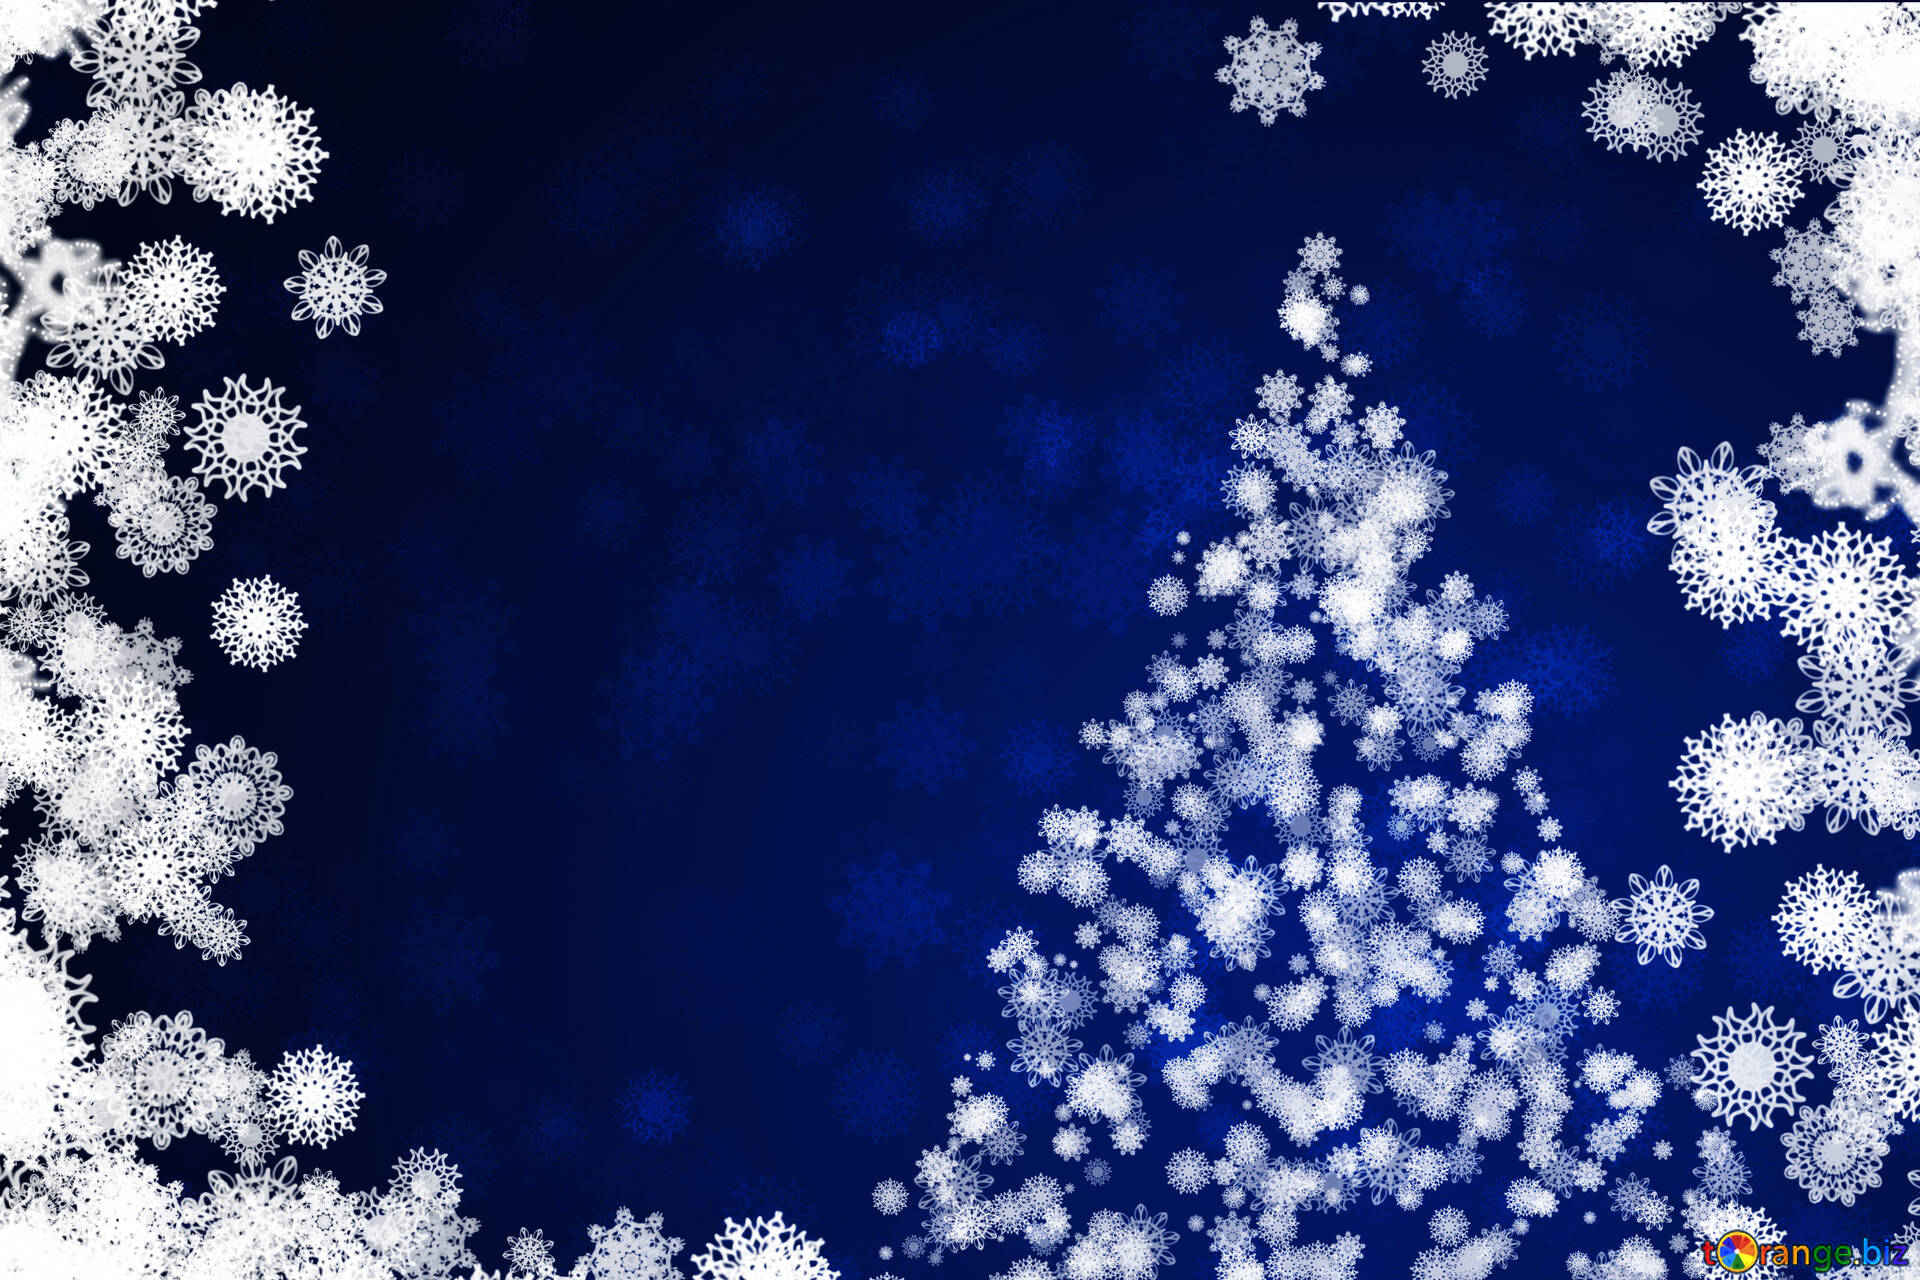 Christmas Tree Image Christmas Background Images Clipart Torange Biz Free Pics On Cc By License